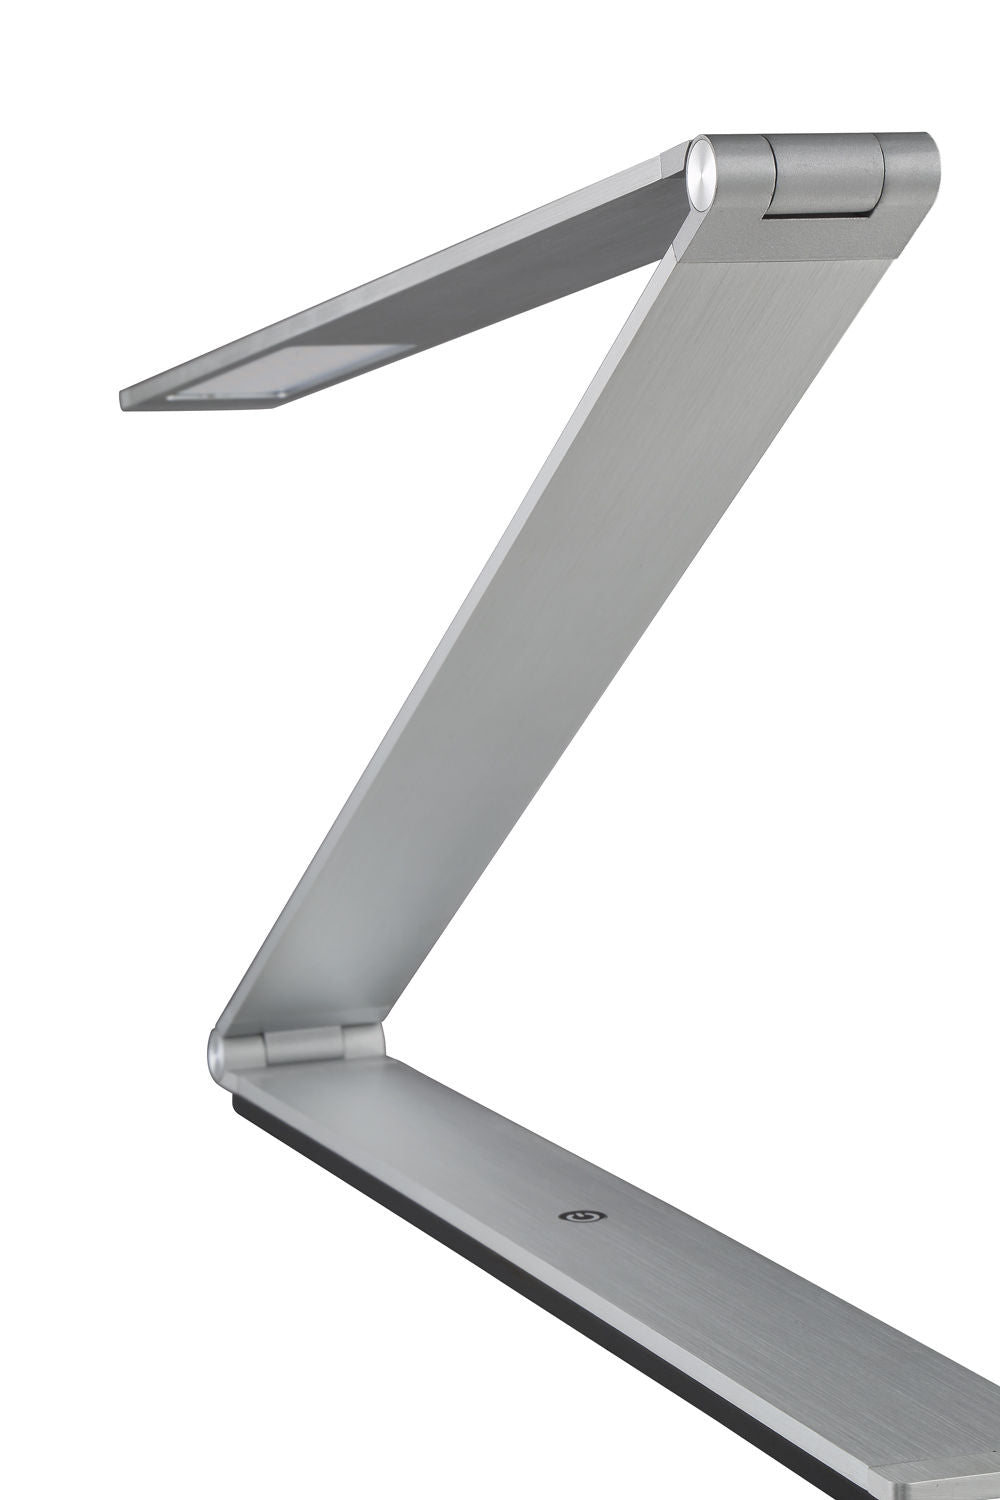 ZEE Lampe sur table Nickel DEL INTÉGRÉ - PTL8618-AL | KENDAL